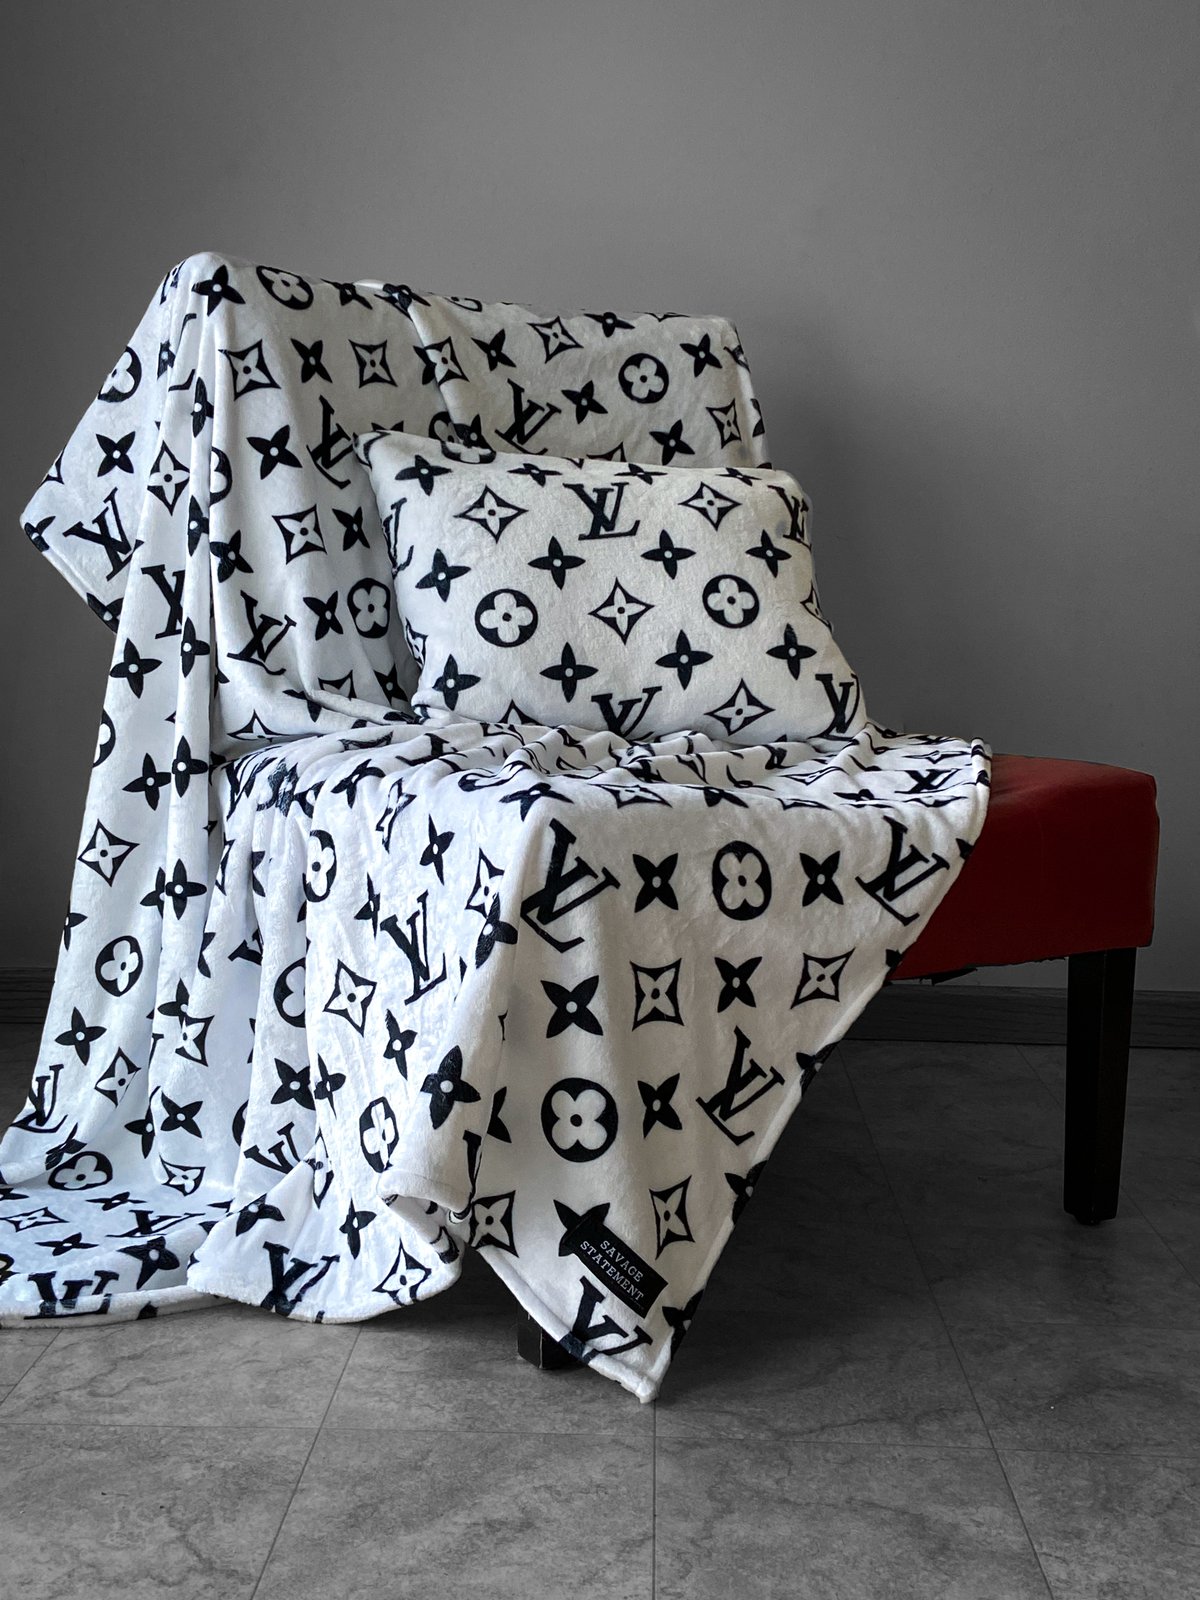 Louis Vuitton Luxury Brand white and gray Fleece Blanket  Luxury blanket  Branded blankets Home decor